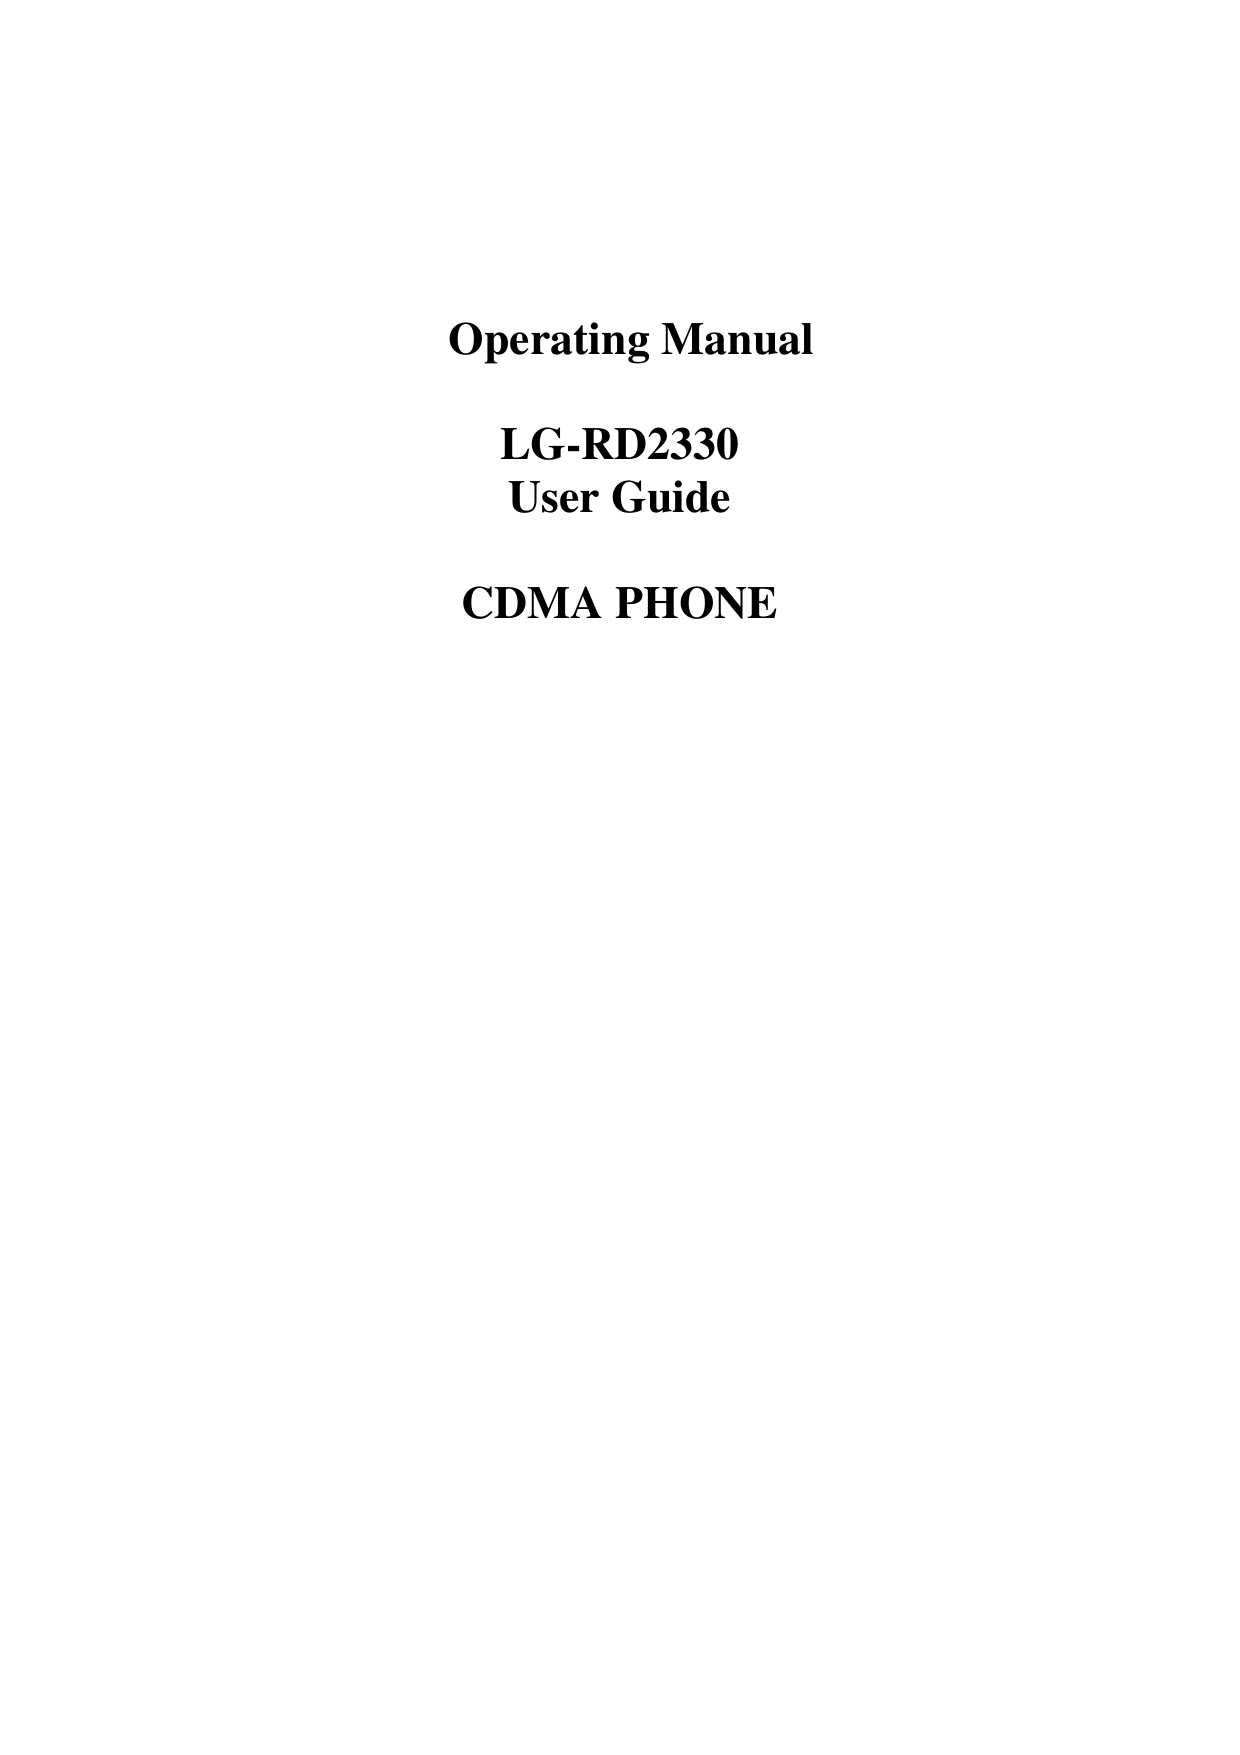    Operating Manual  LG-RD2330 User Guide  CDMA PHONE                          